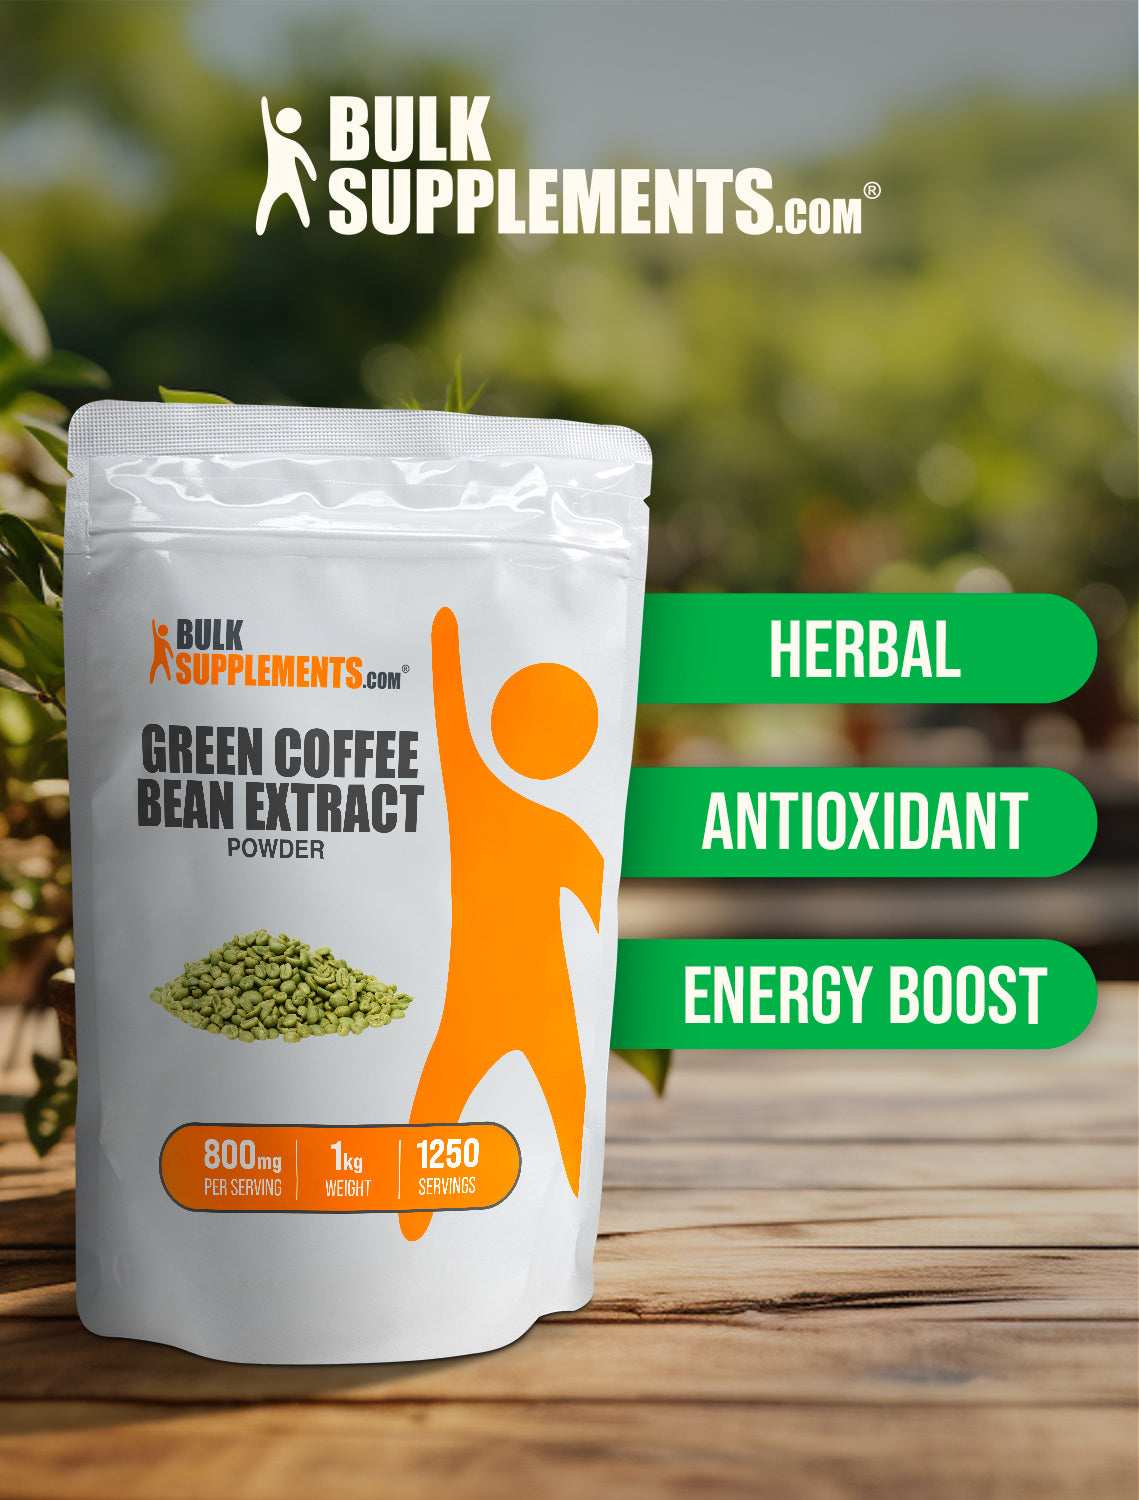 Green Coffee Bean extract powder keyword image 1kg